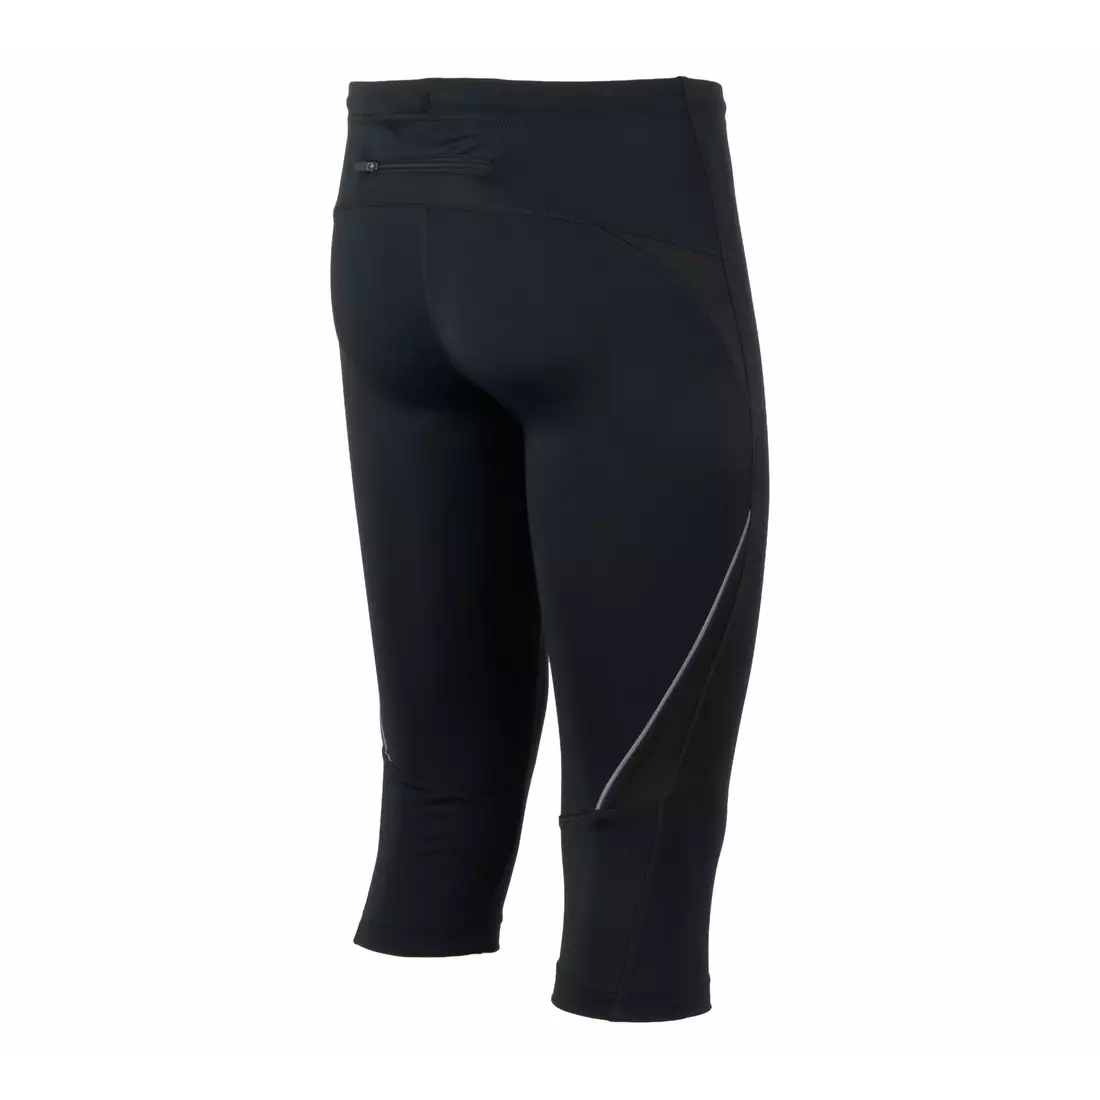 ASICS 322348-0900 women's, uninsulated pants, 3/4, color: Black